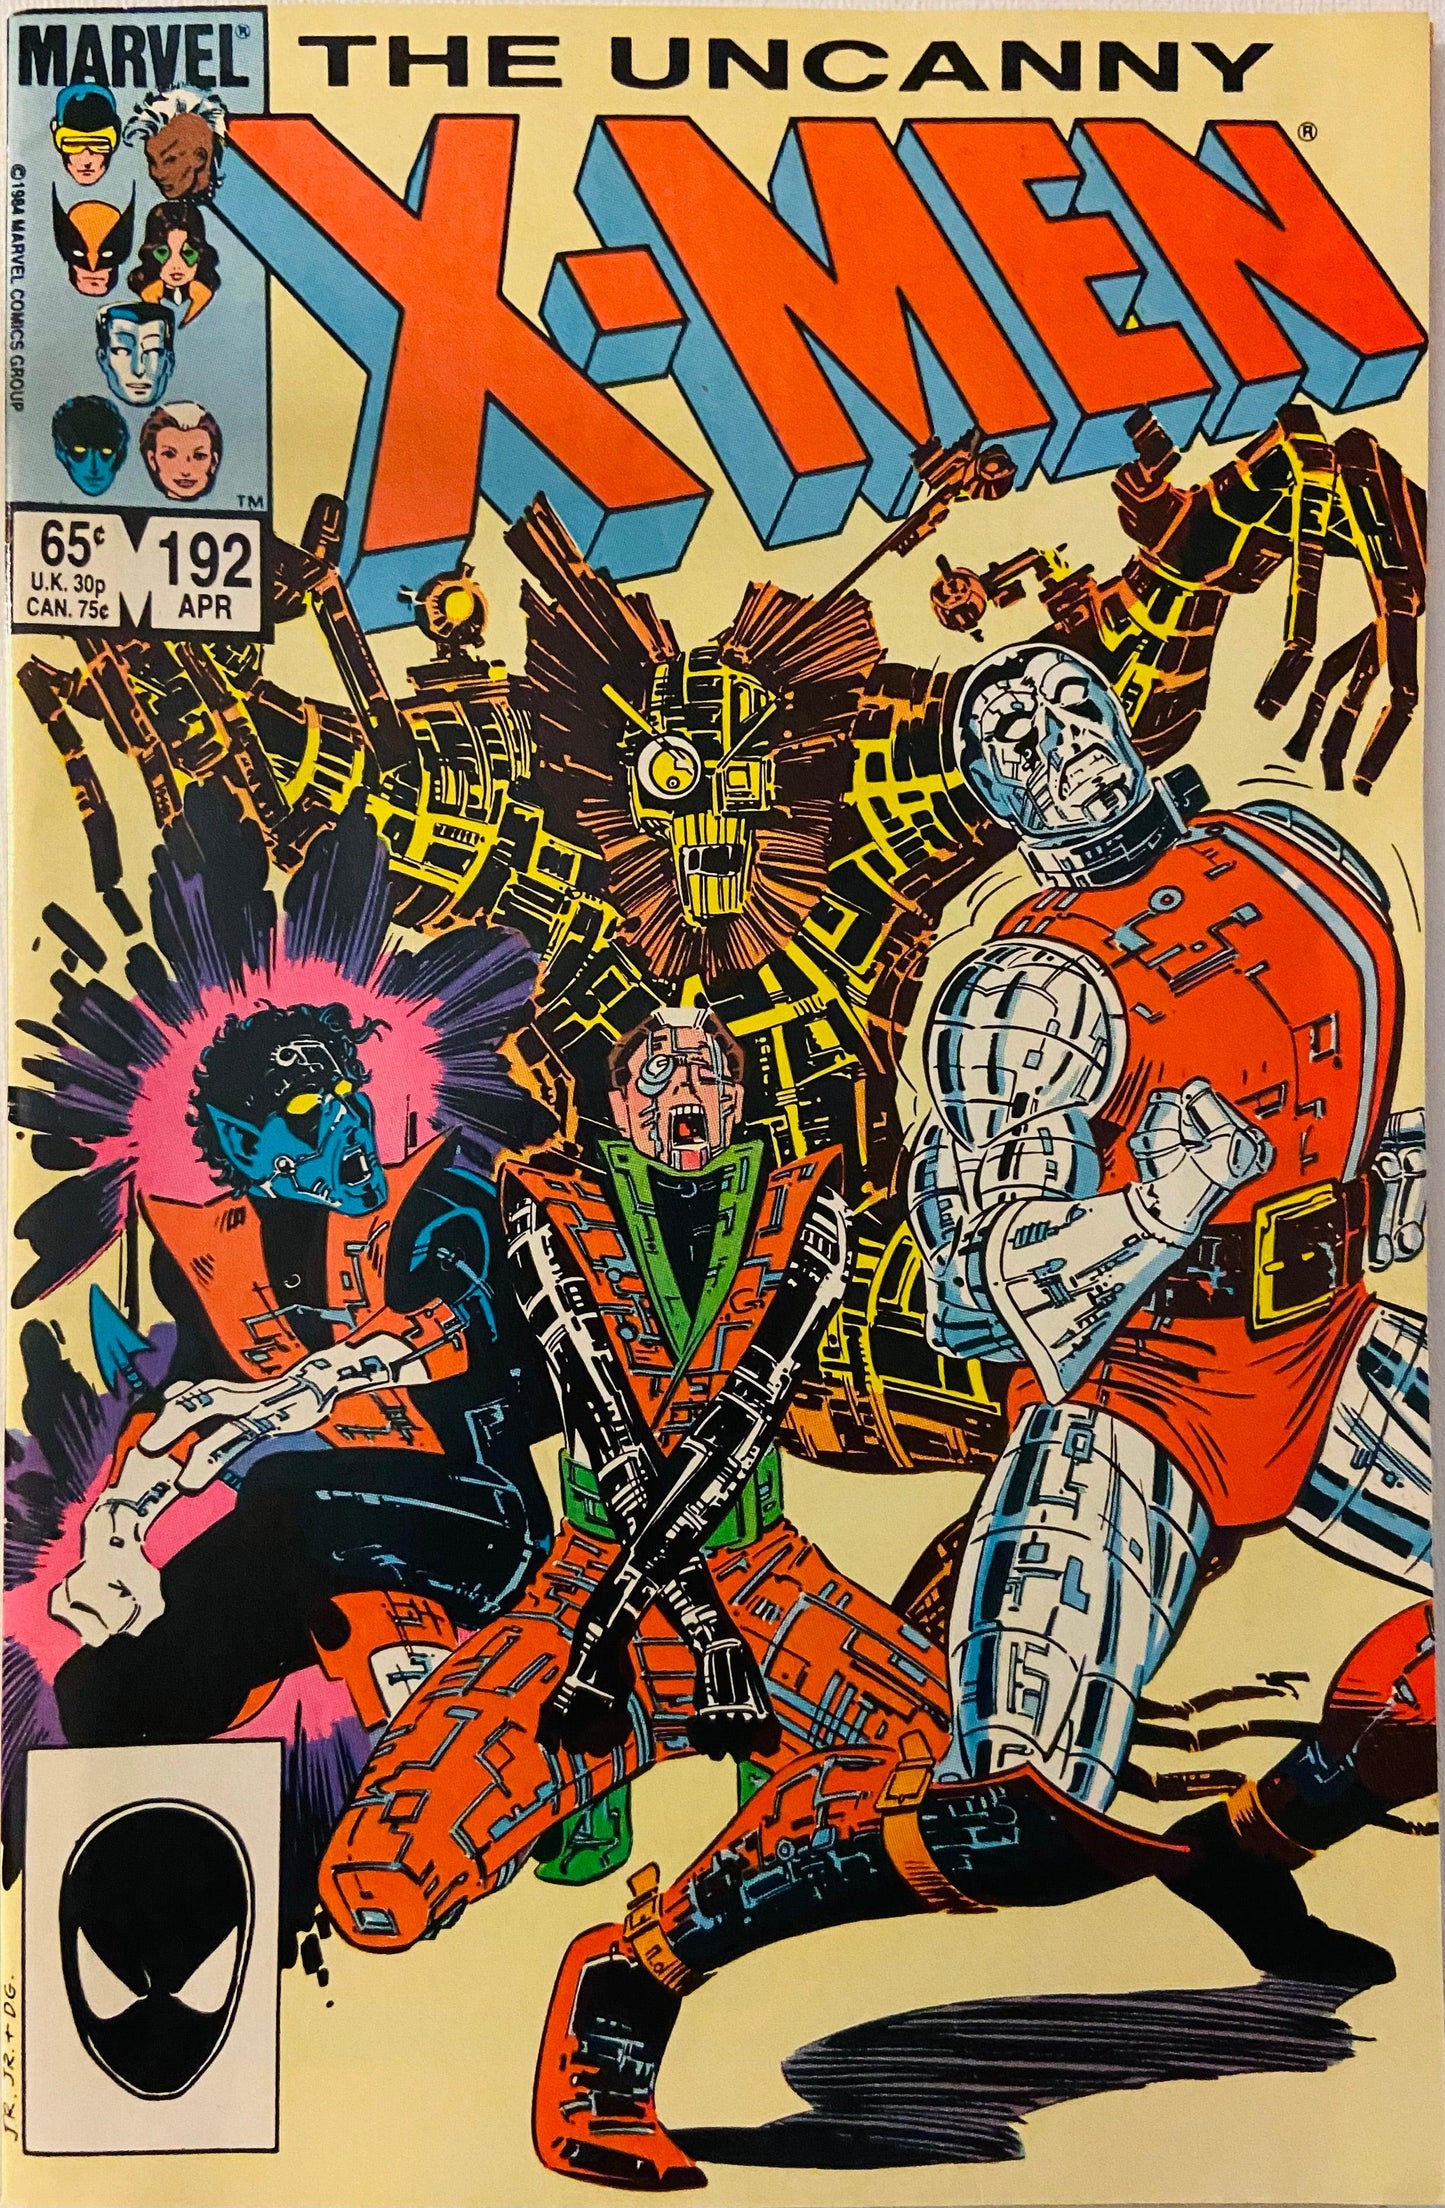 Uncanny X-men #192 - HolyGrail Comix